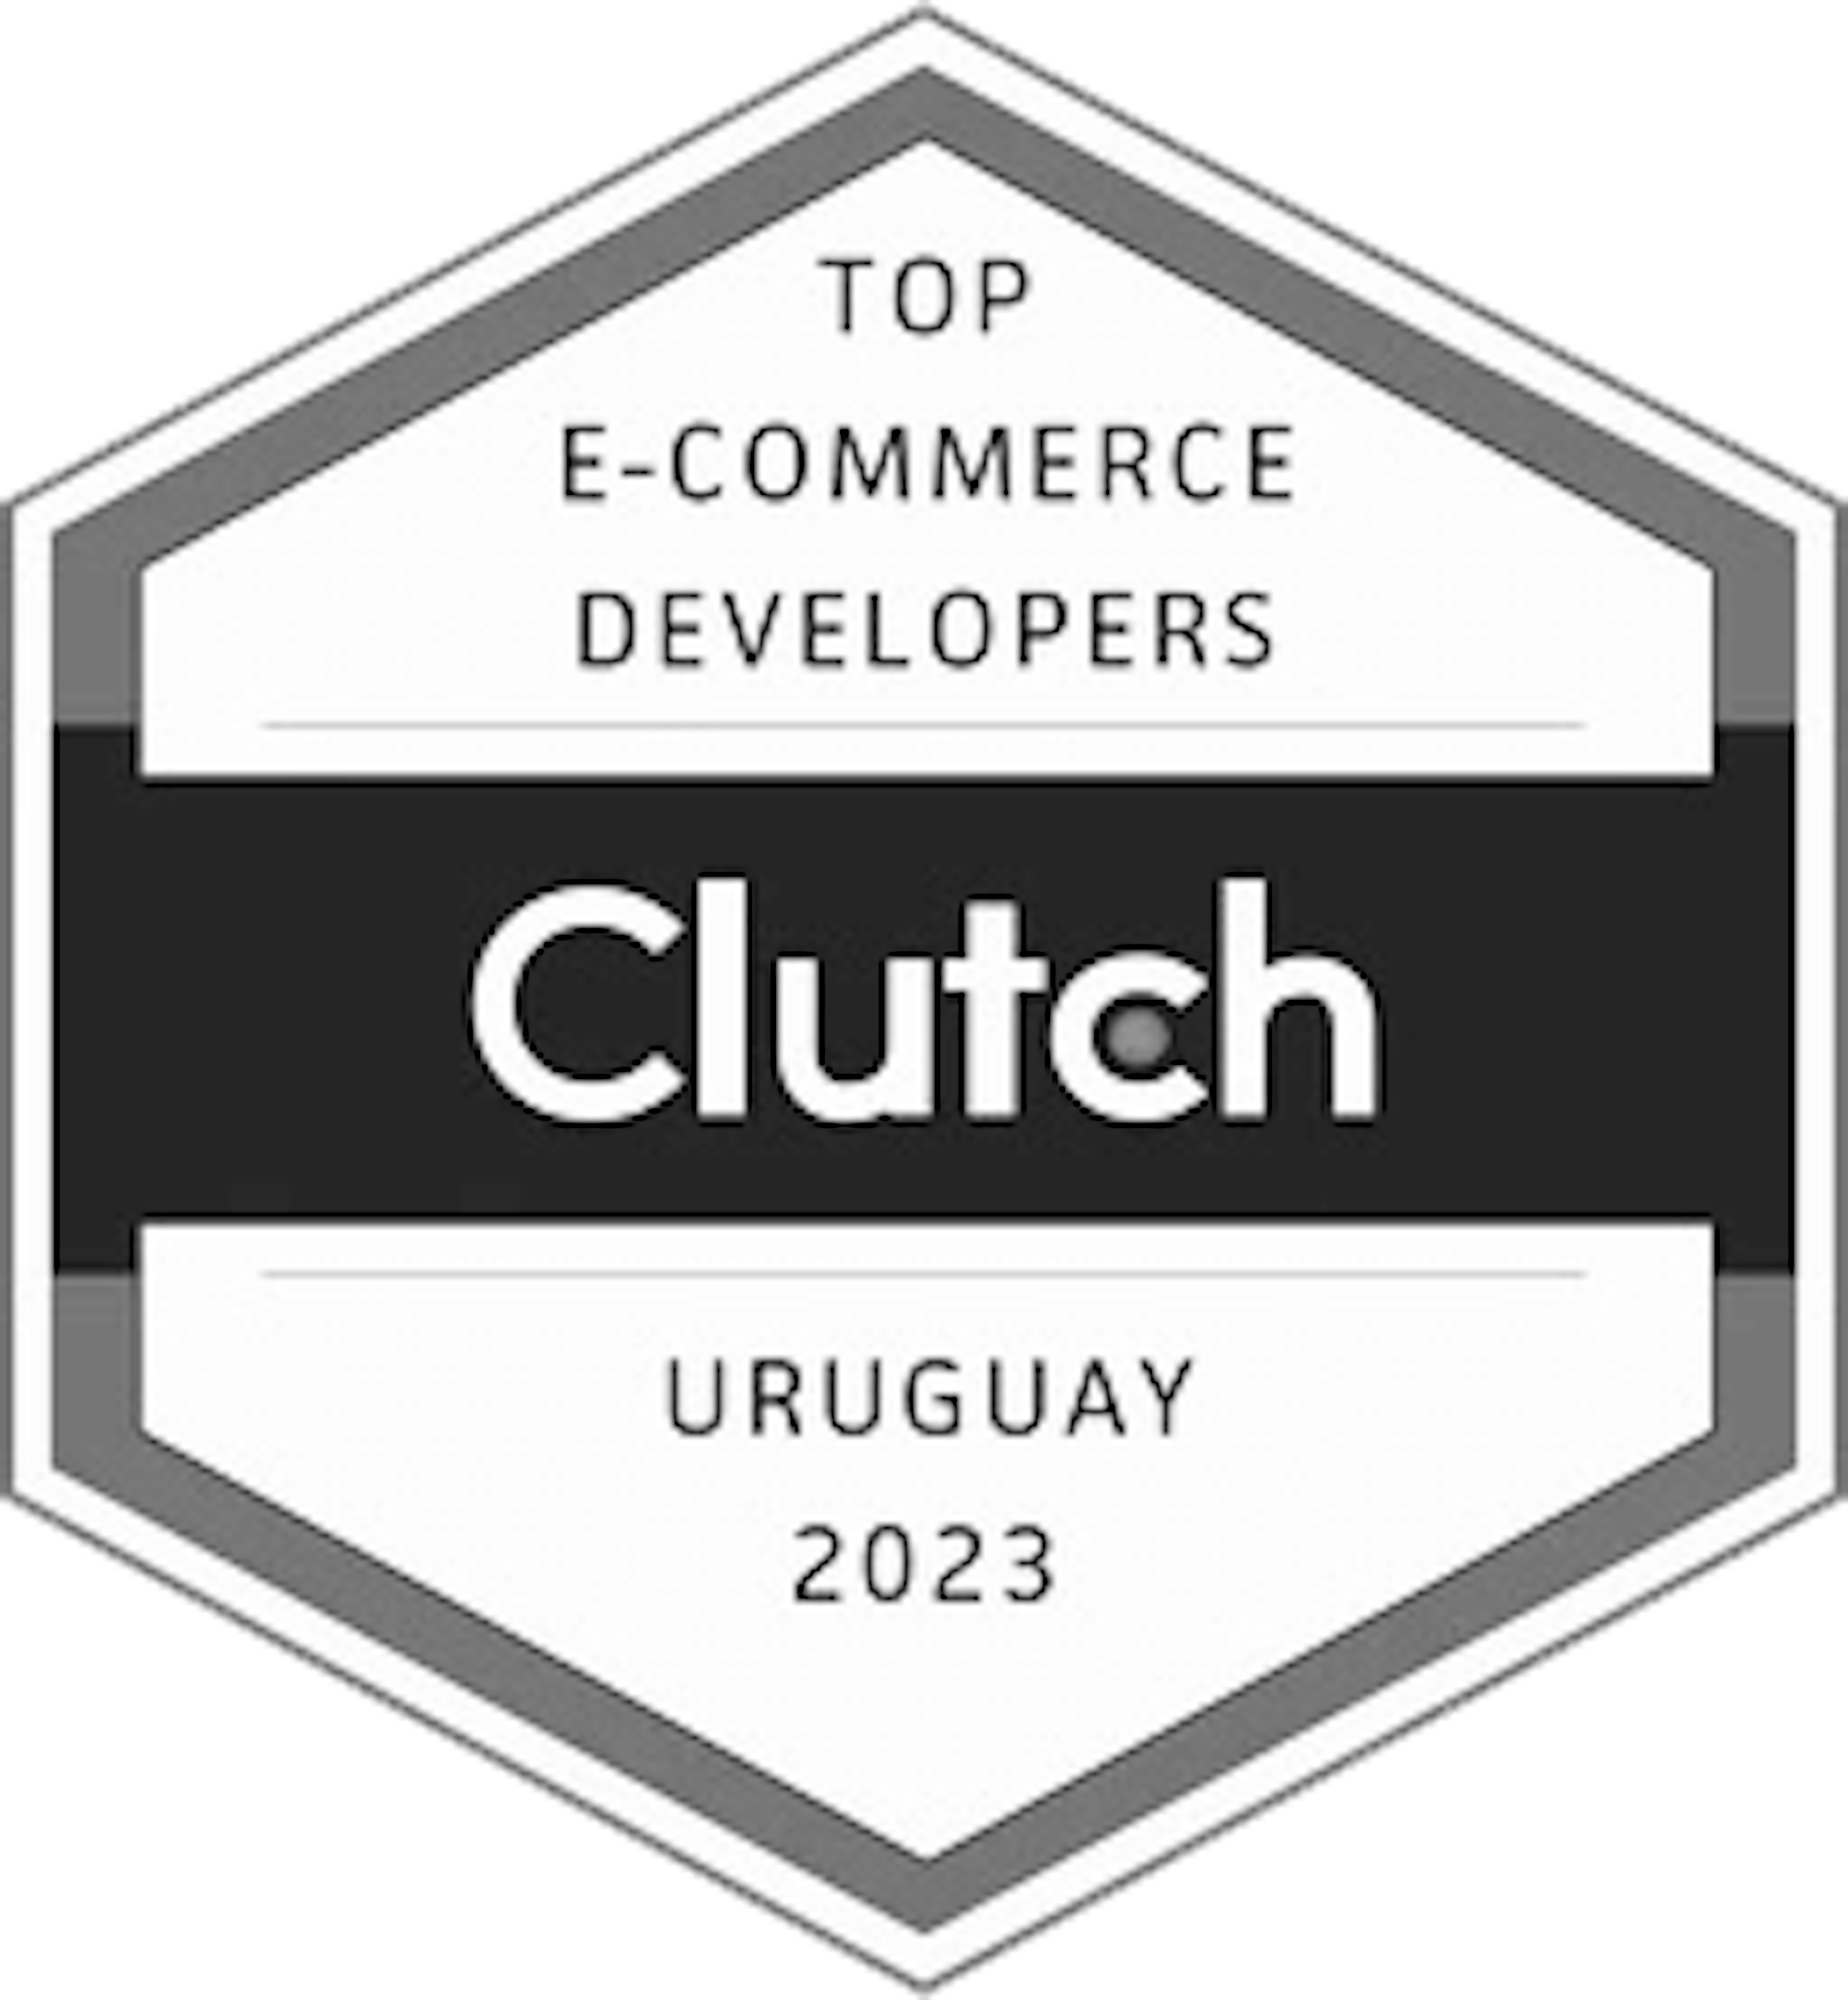 Top E-Commerce Developers - Uruguay 2023